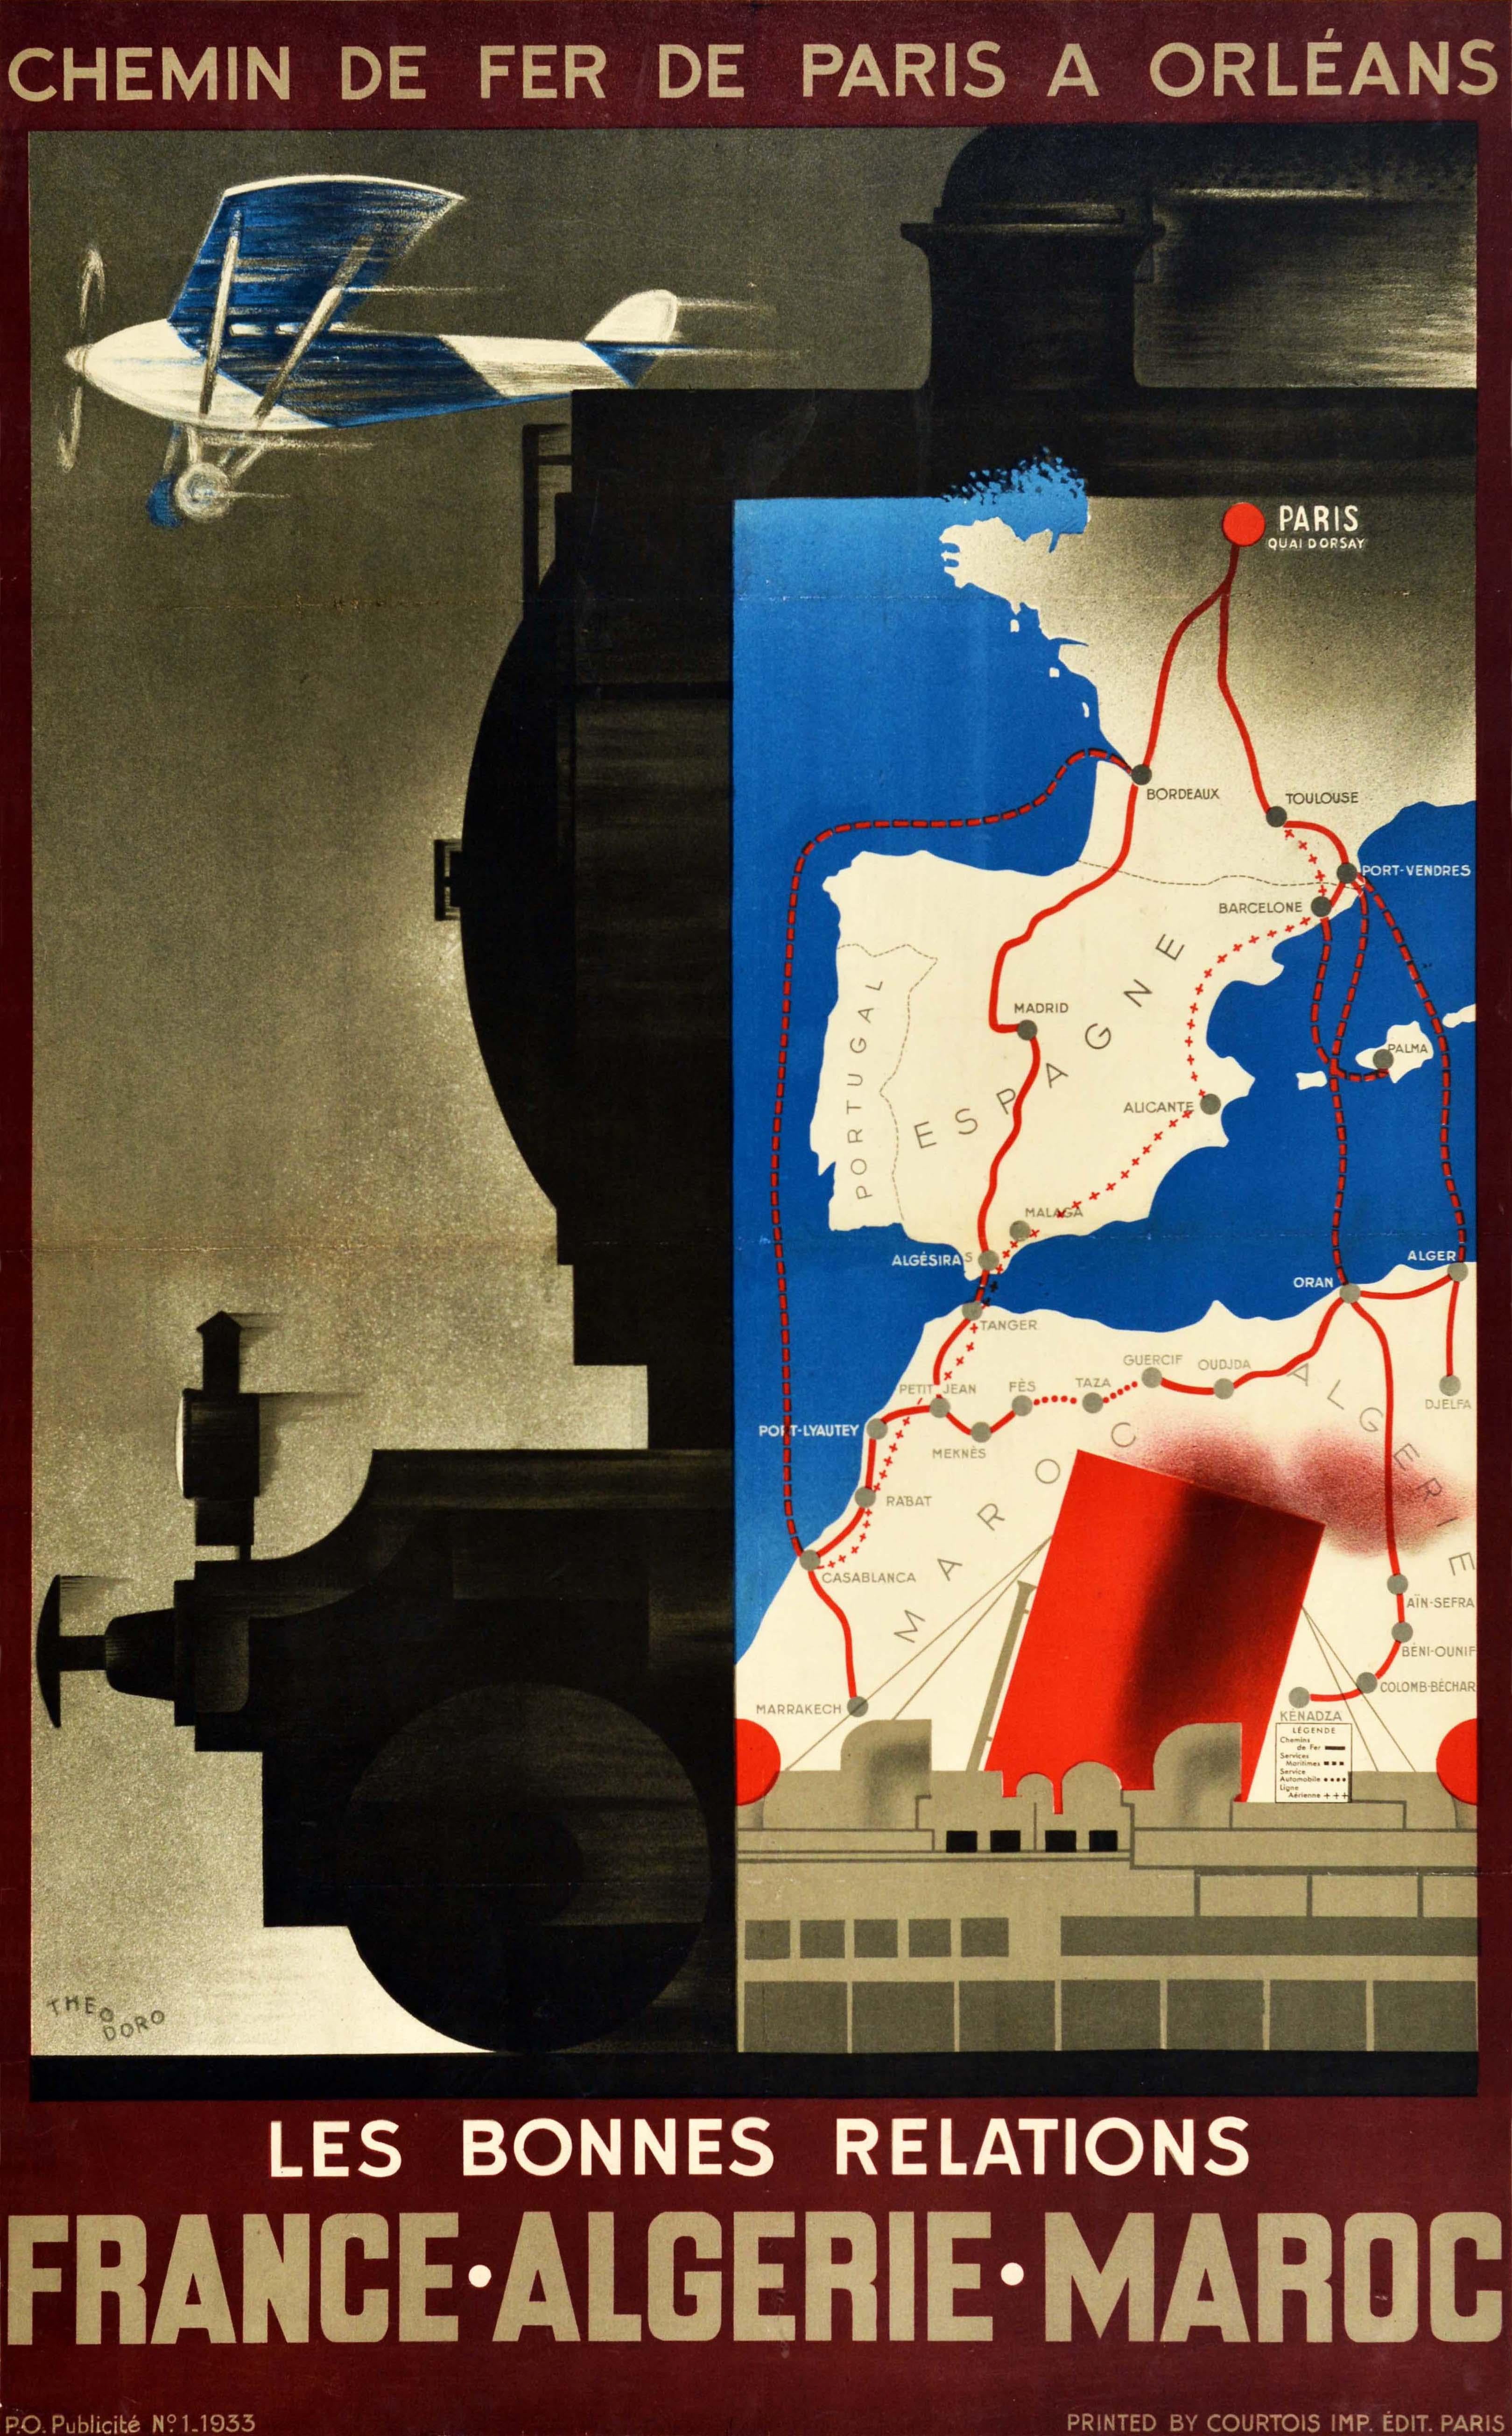 Theodoro Print - Original Vintage Paris Orleans Railway Poster France Algeria Morocco Travel Map